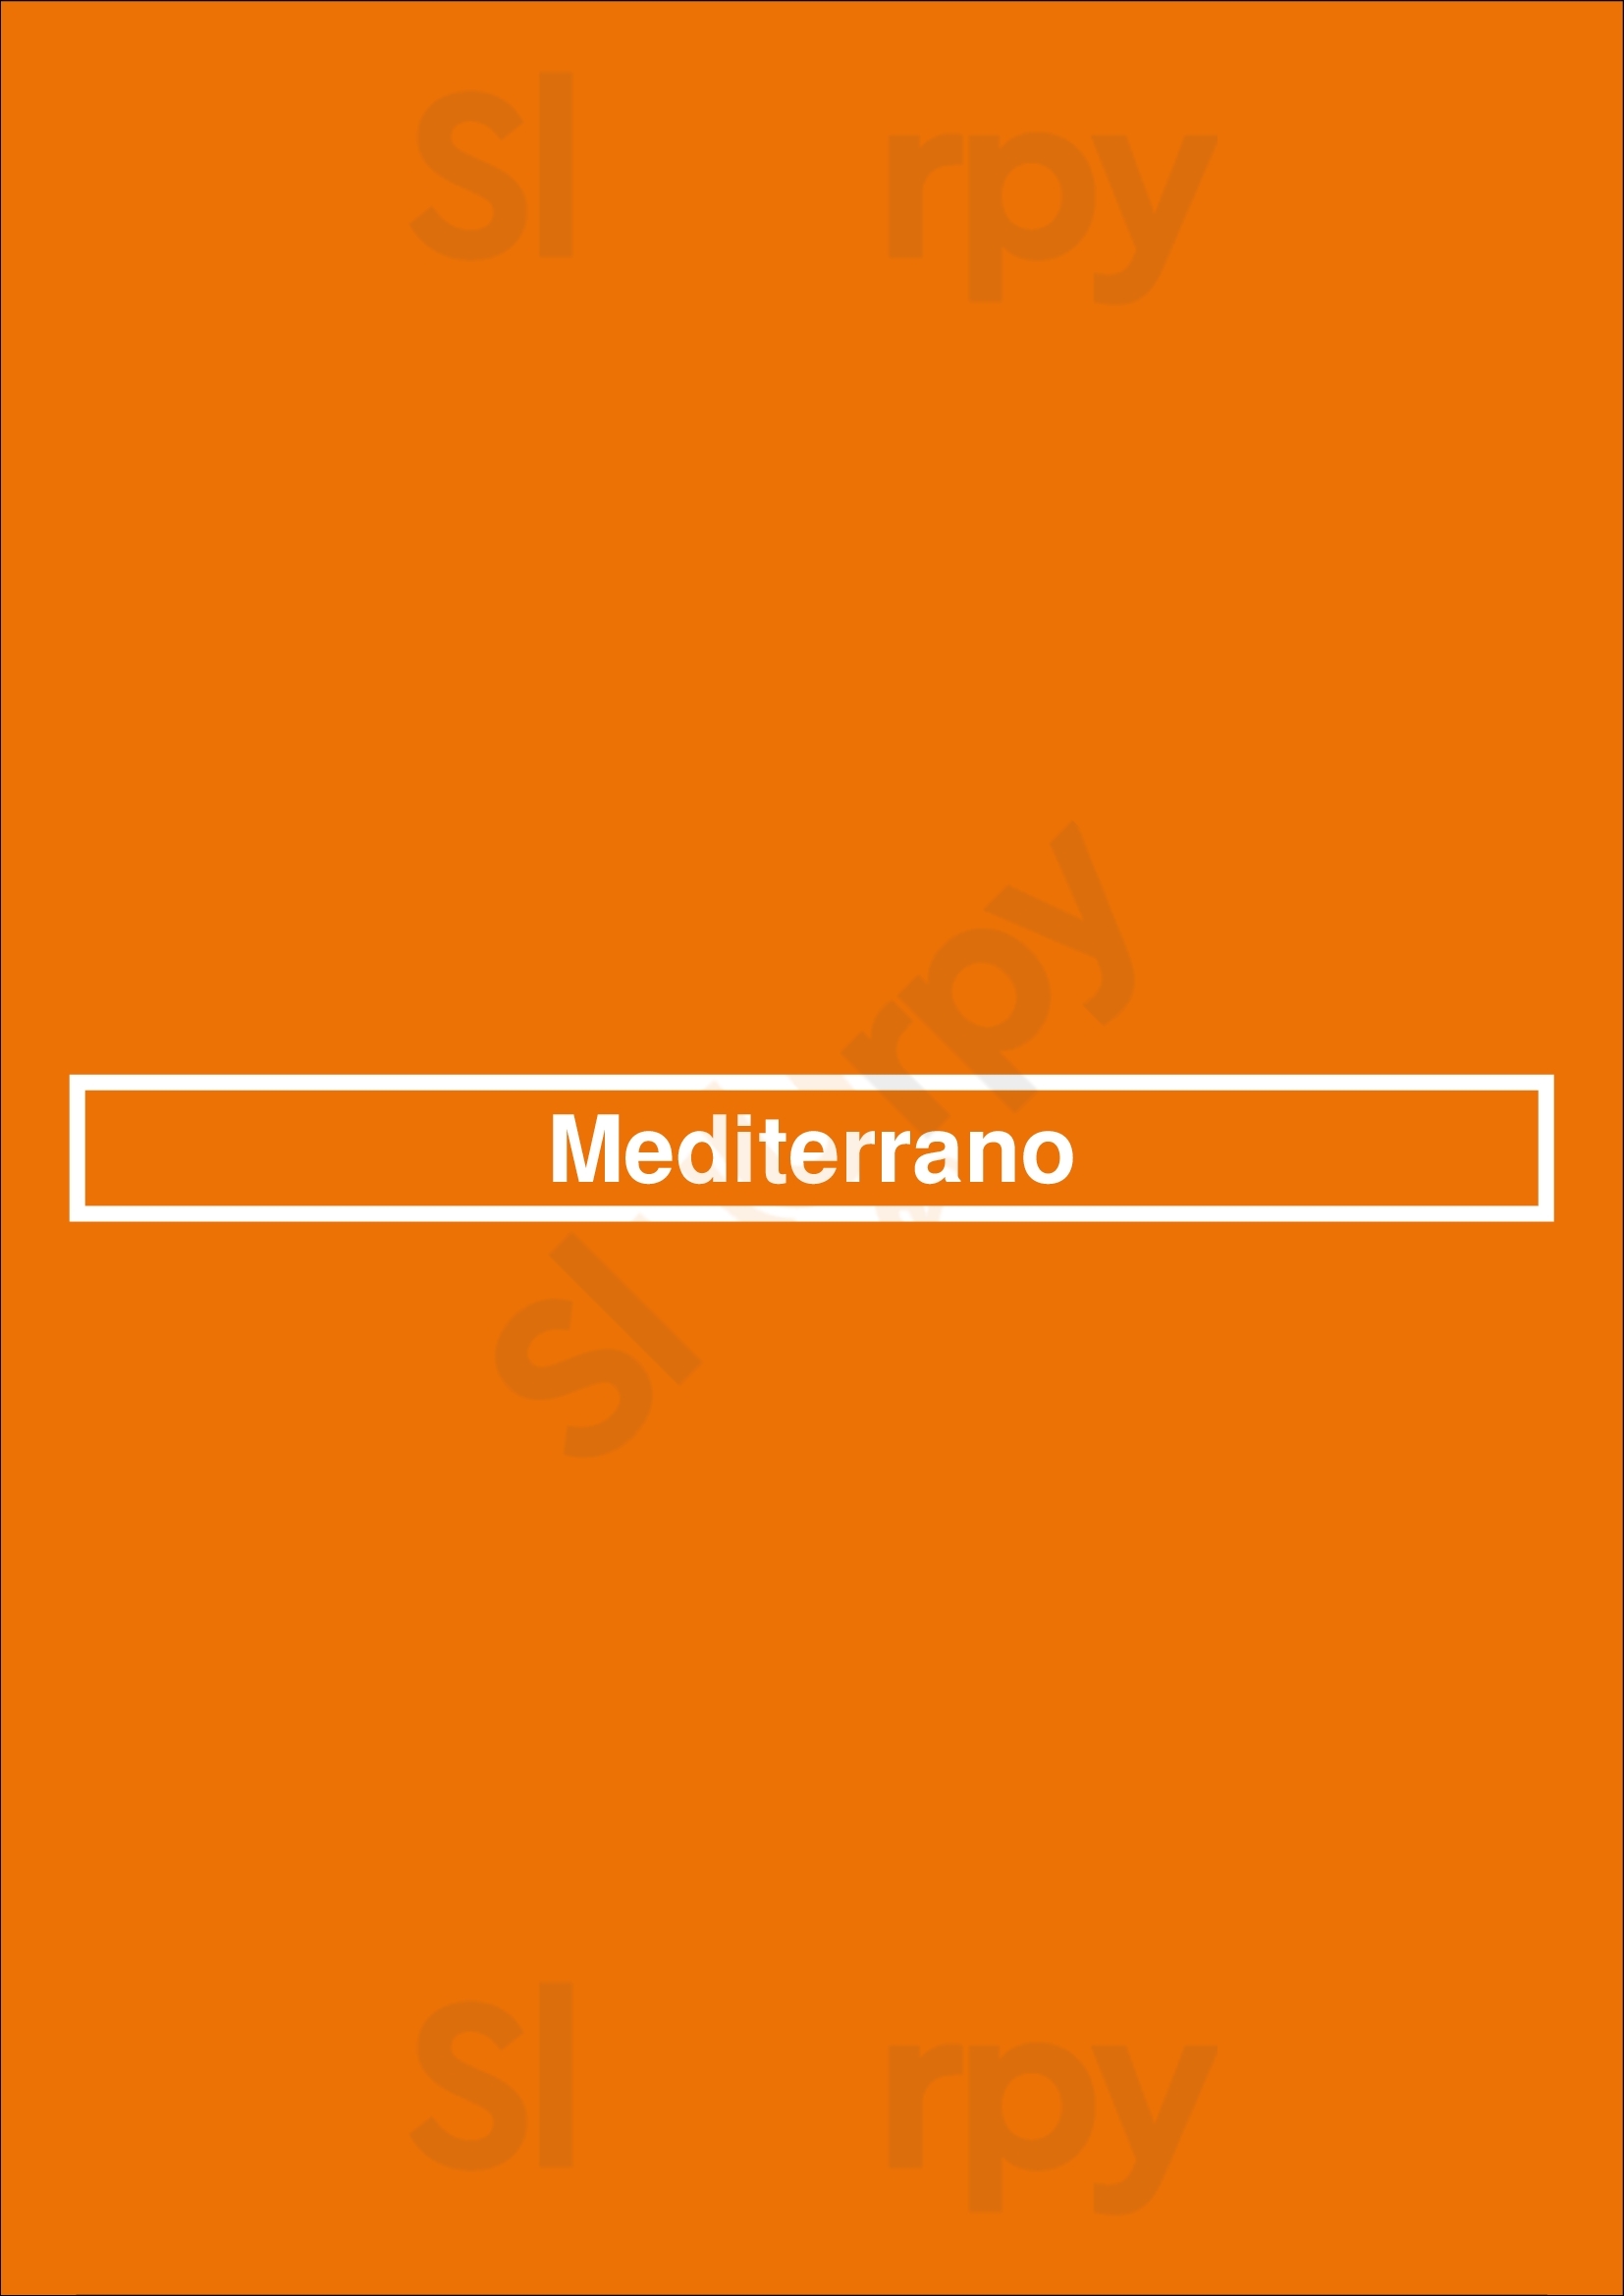 Mediterrano Naples Menu - 1